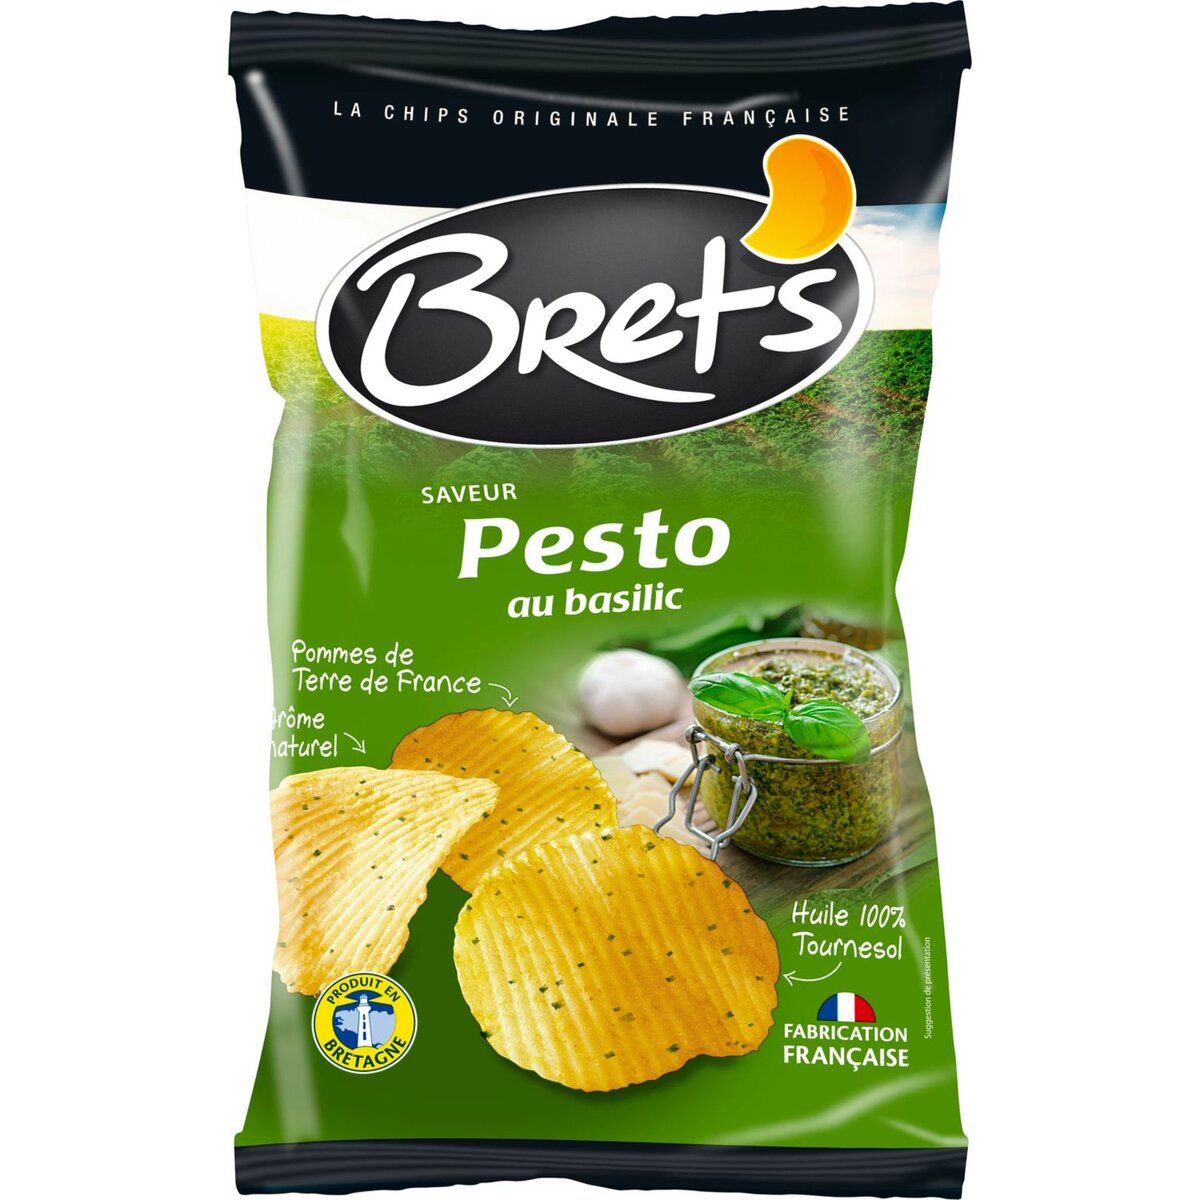 BRET'S Bret's chips saveur pesto 125g